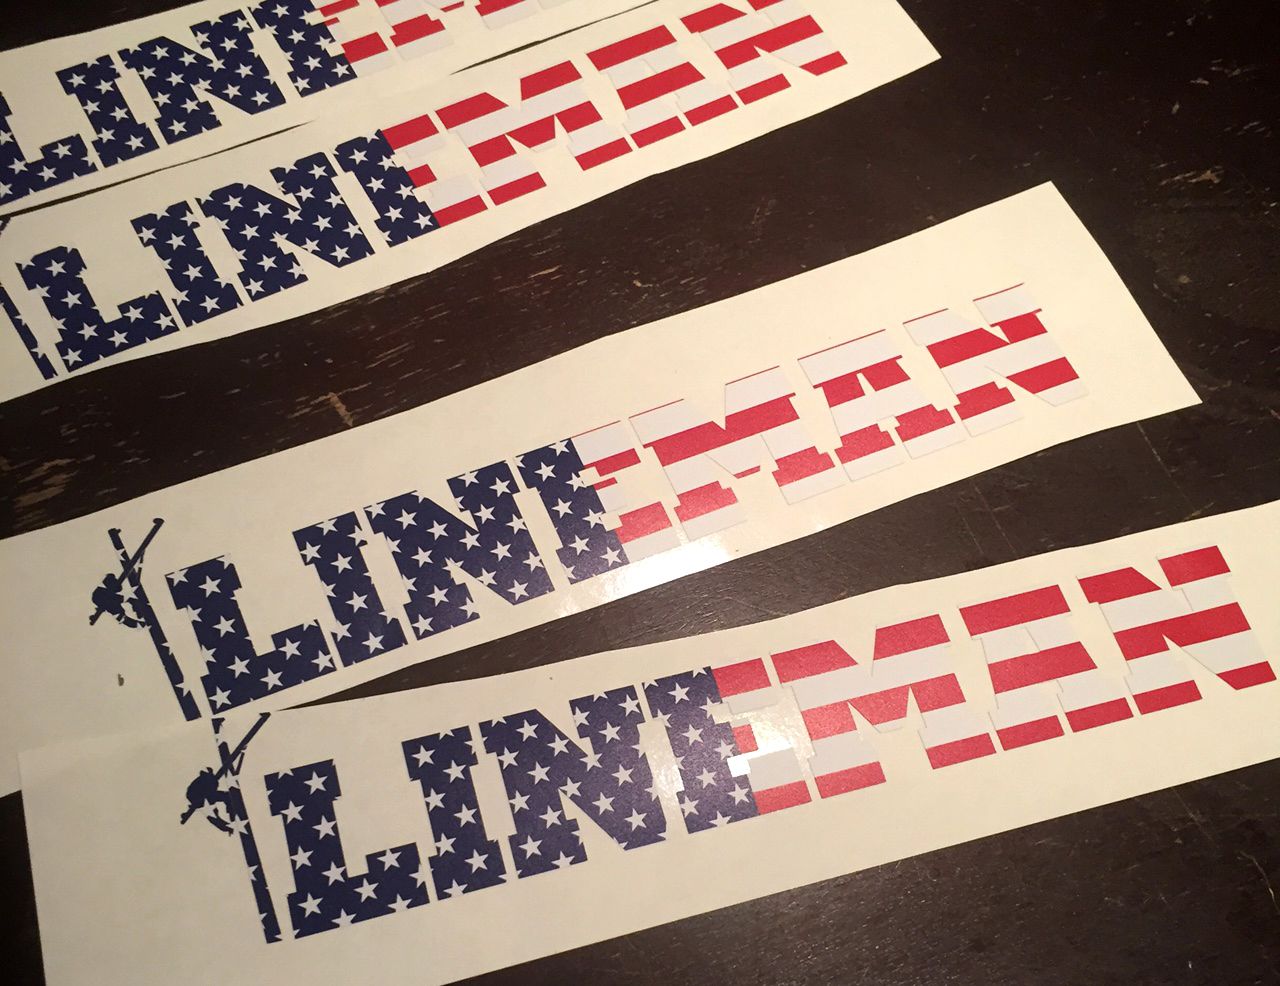 American Lineman Sticker